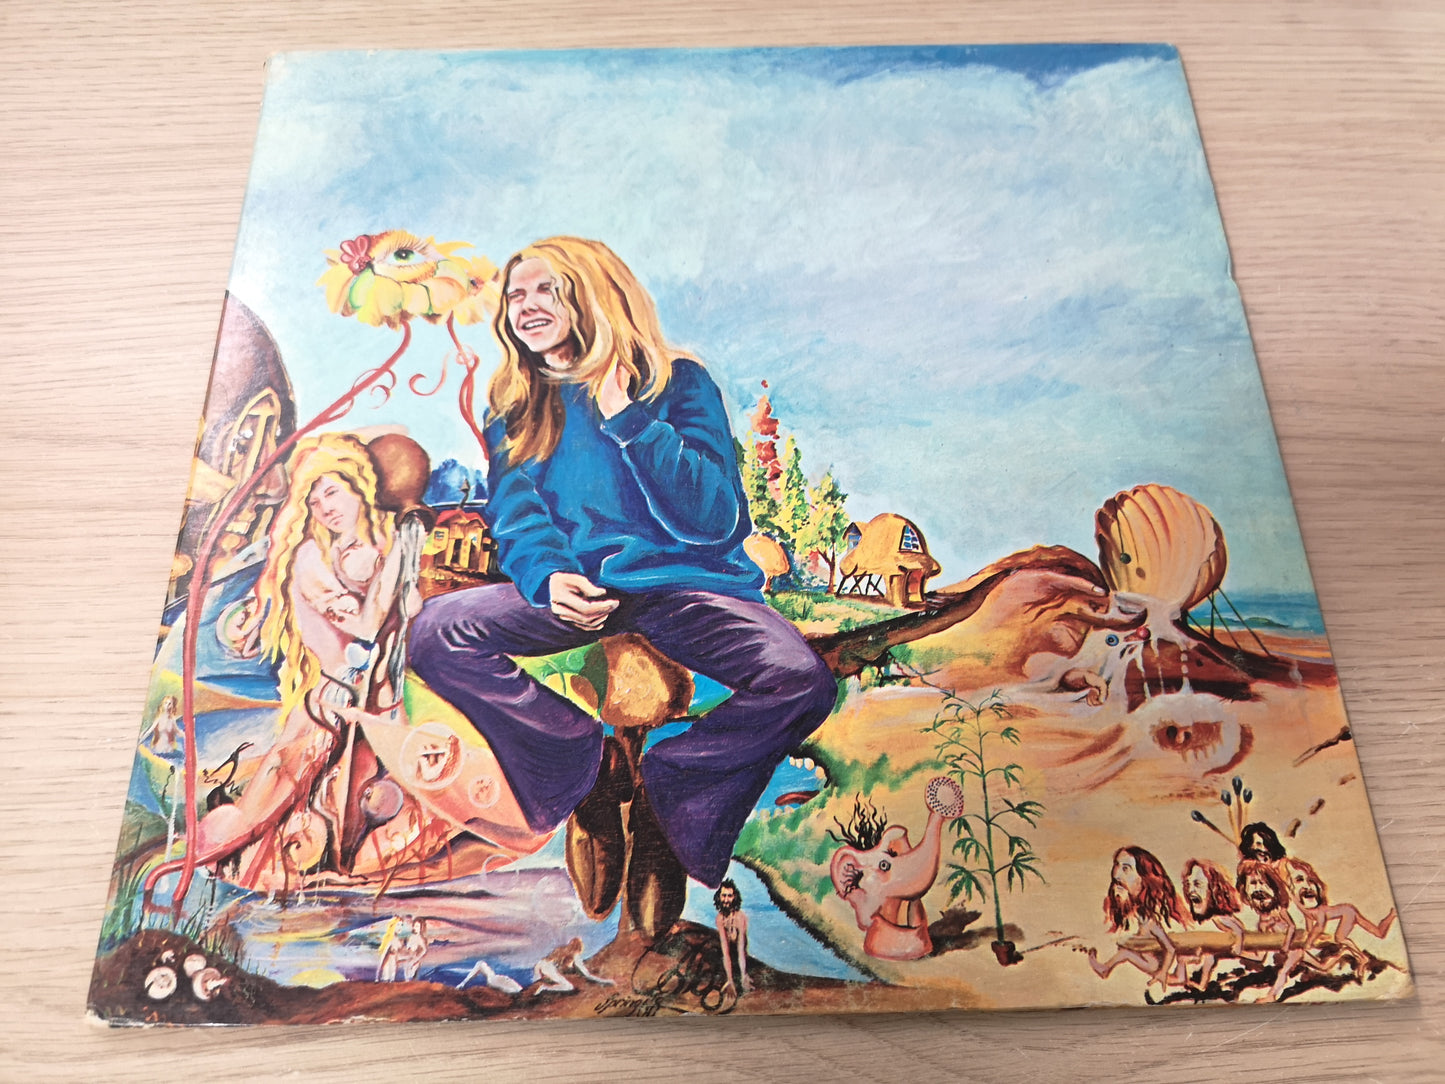 Blue Cheer "Outside Inside" Orig US 1968 VG++/EX (Tri-Fold Cover)